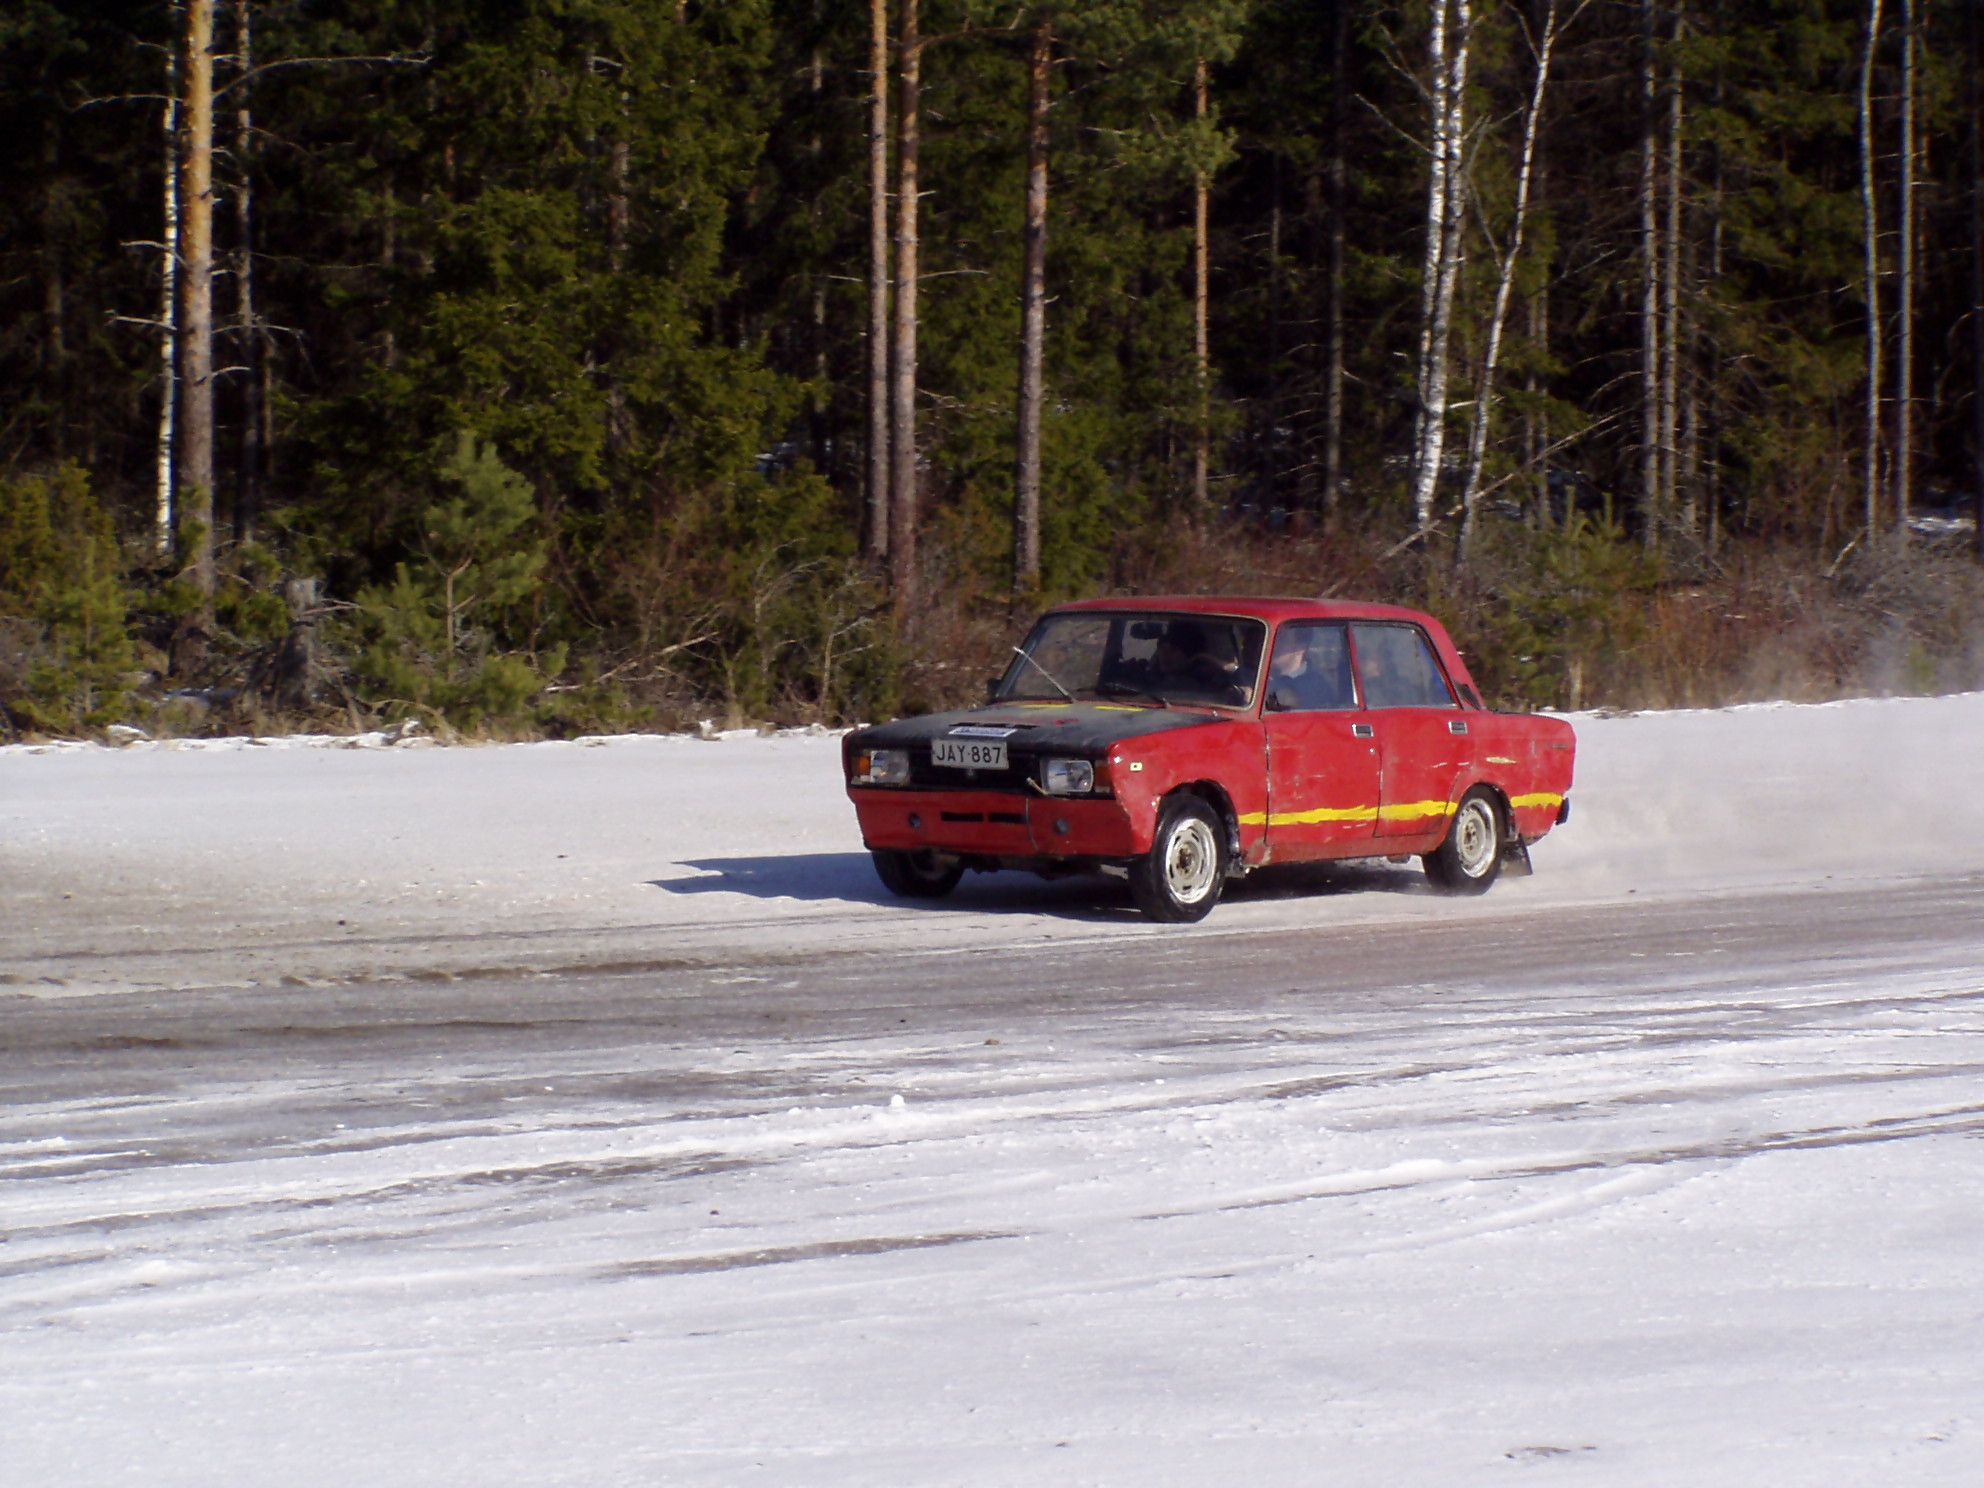 X-Treme talviajot 19.3.2005, Punainen Lada